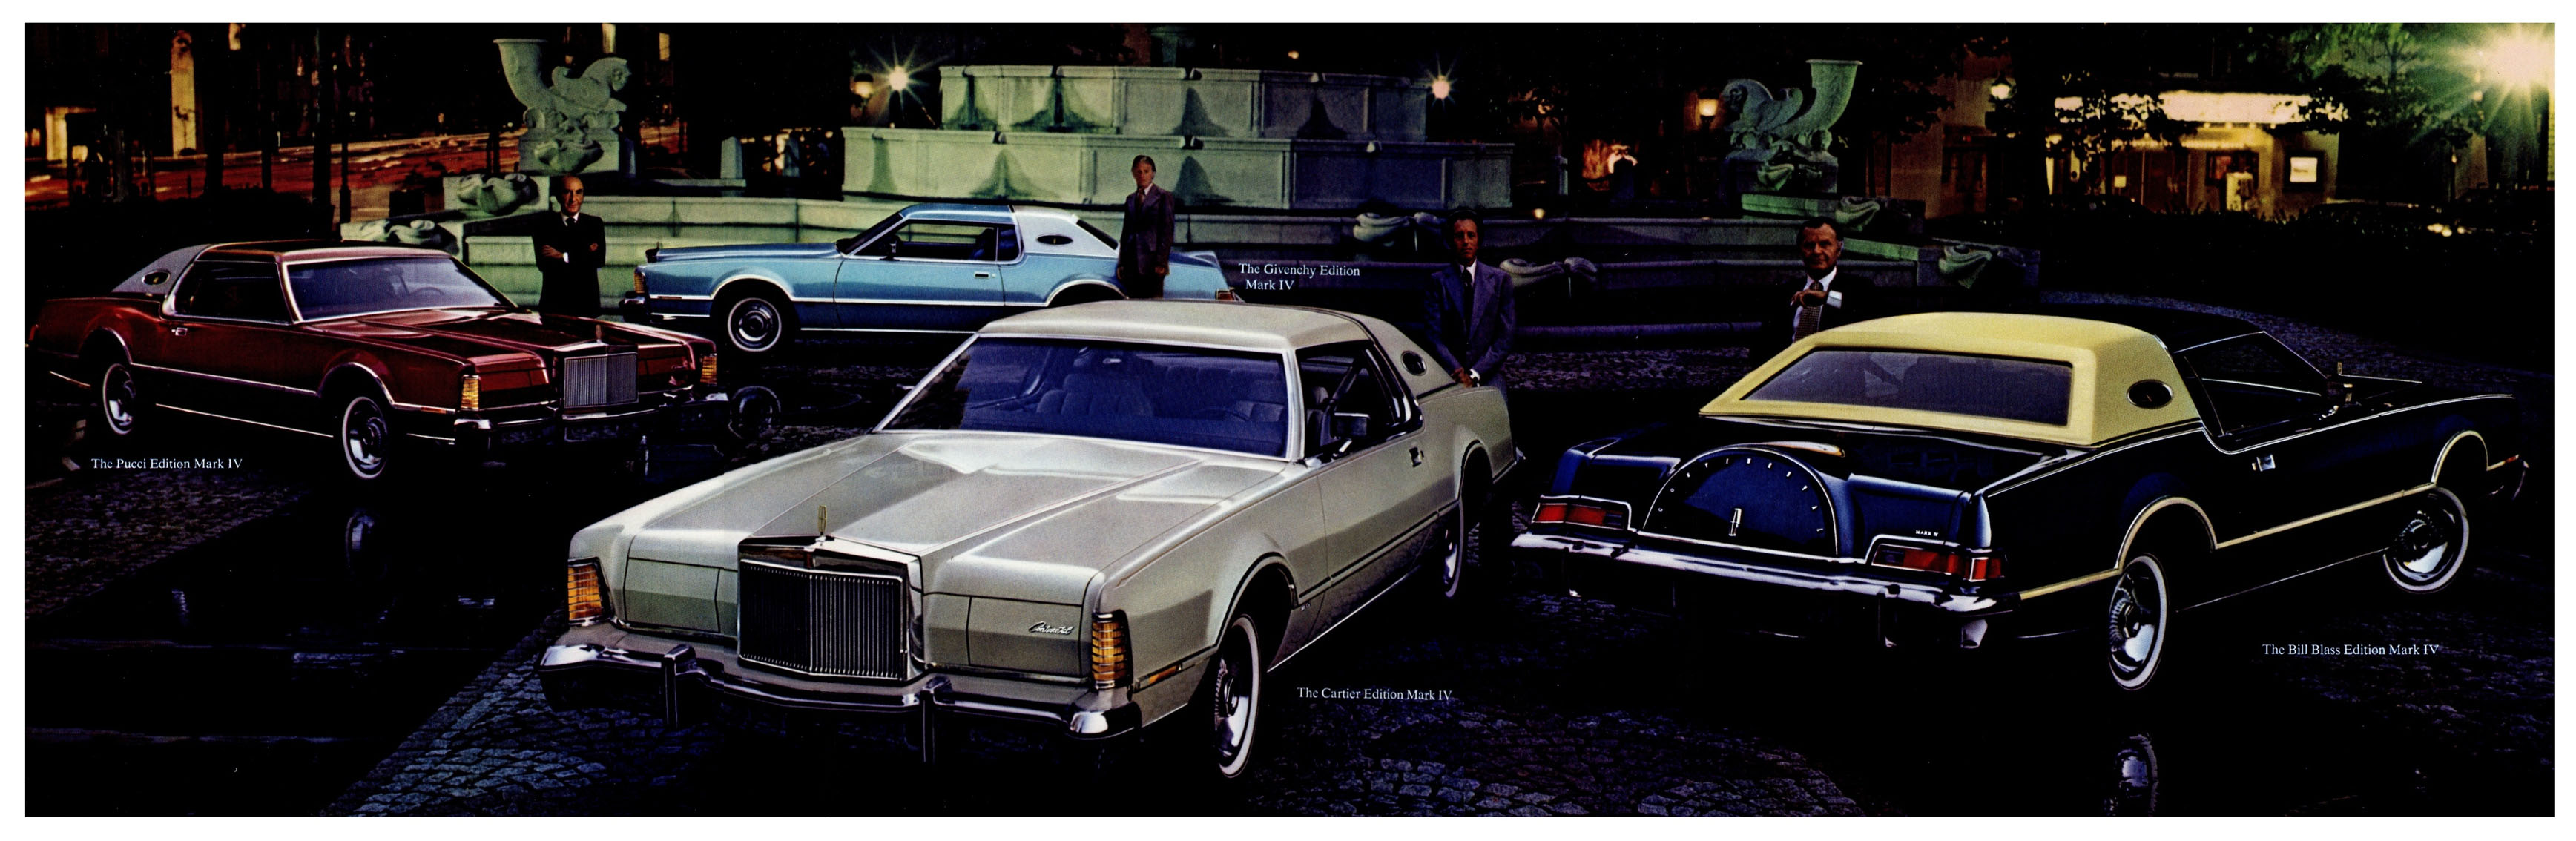 1976 Lincoln Continental Mark IV-03